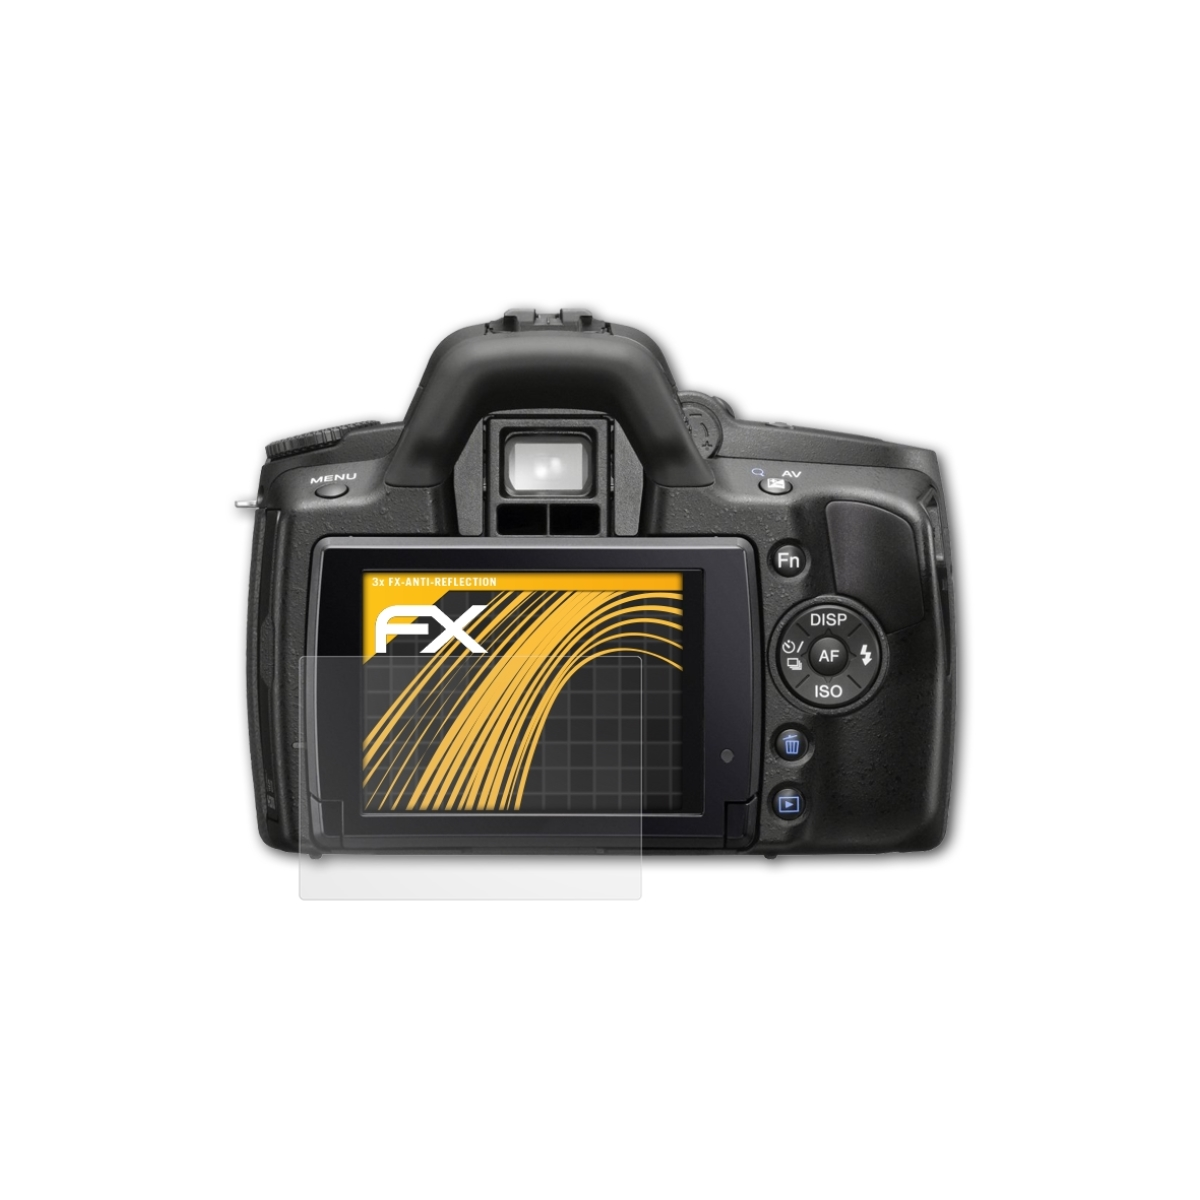 ATFOLIX 3x FX-Antireflex Displayschutz(für (DSLR-A390)) a390 Alpha Sony